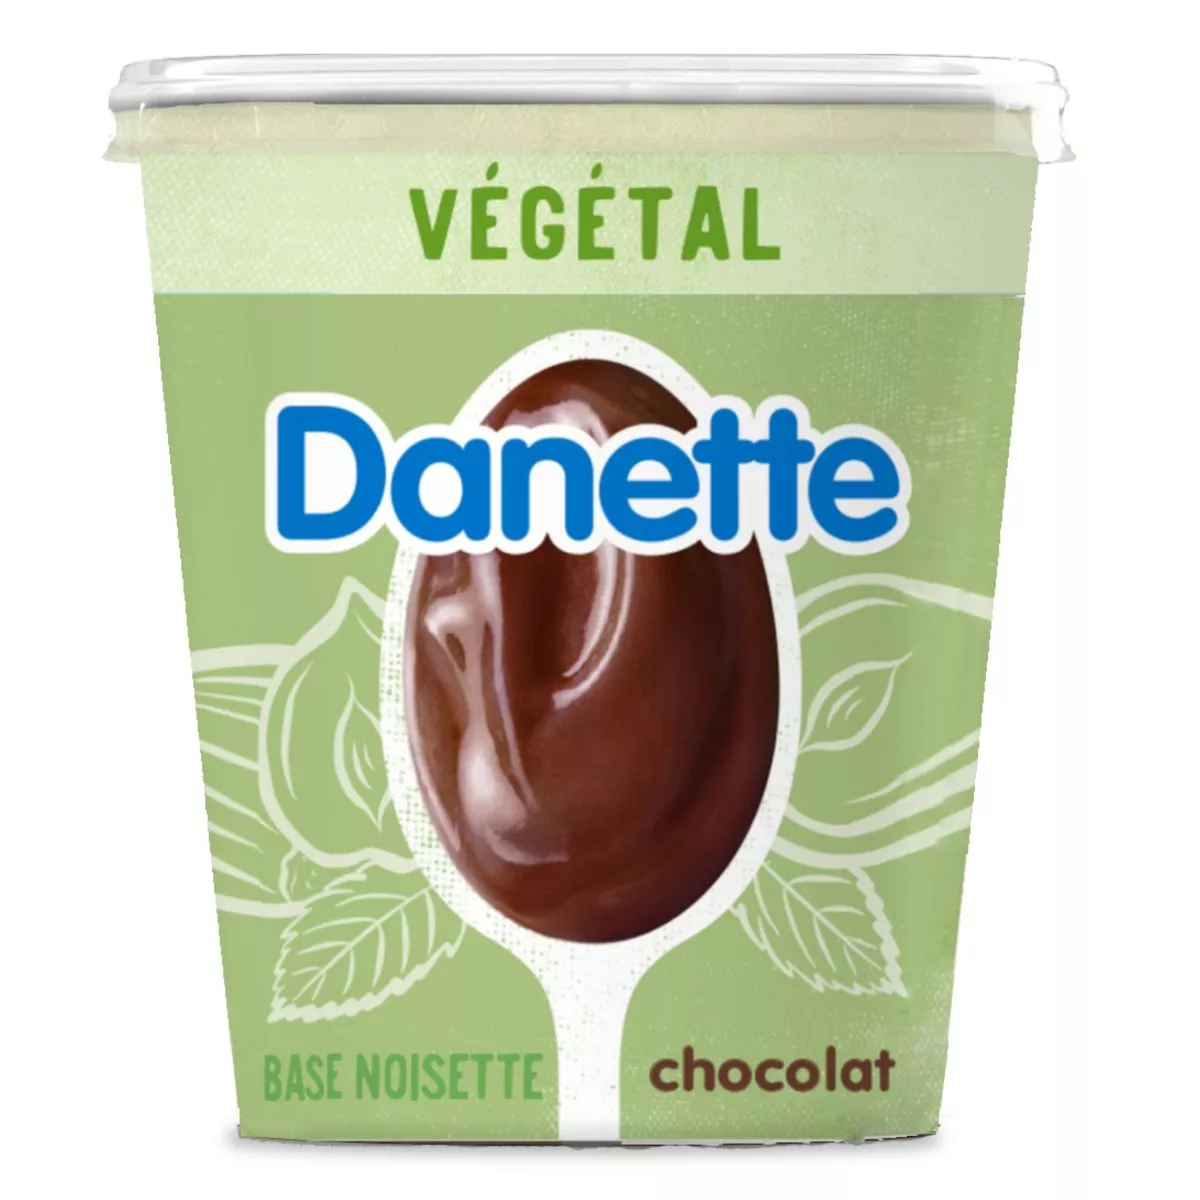 Danone Danette Chocolate and Hazelnut vegetal Creme dessert (with coconut milk) 400g